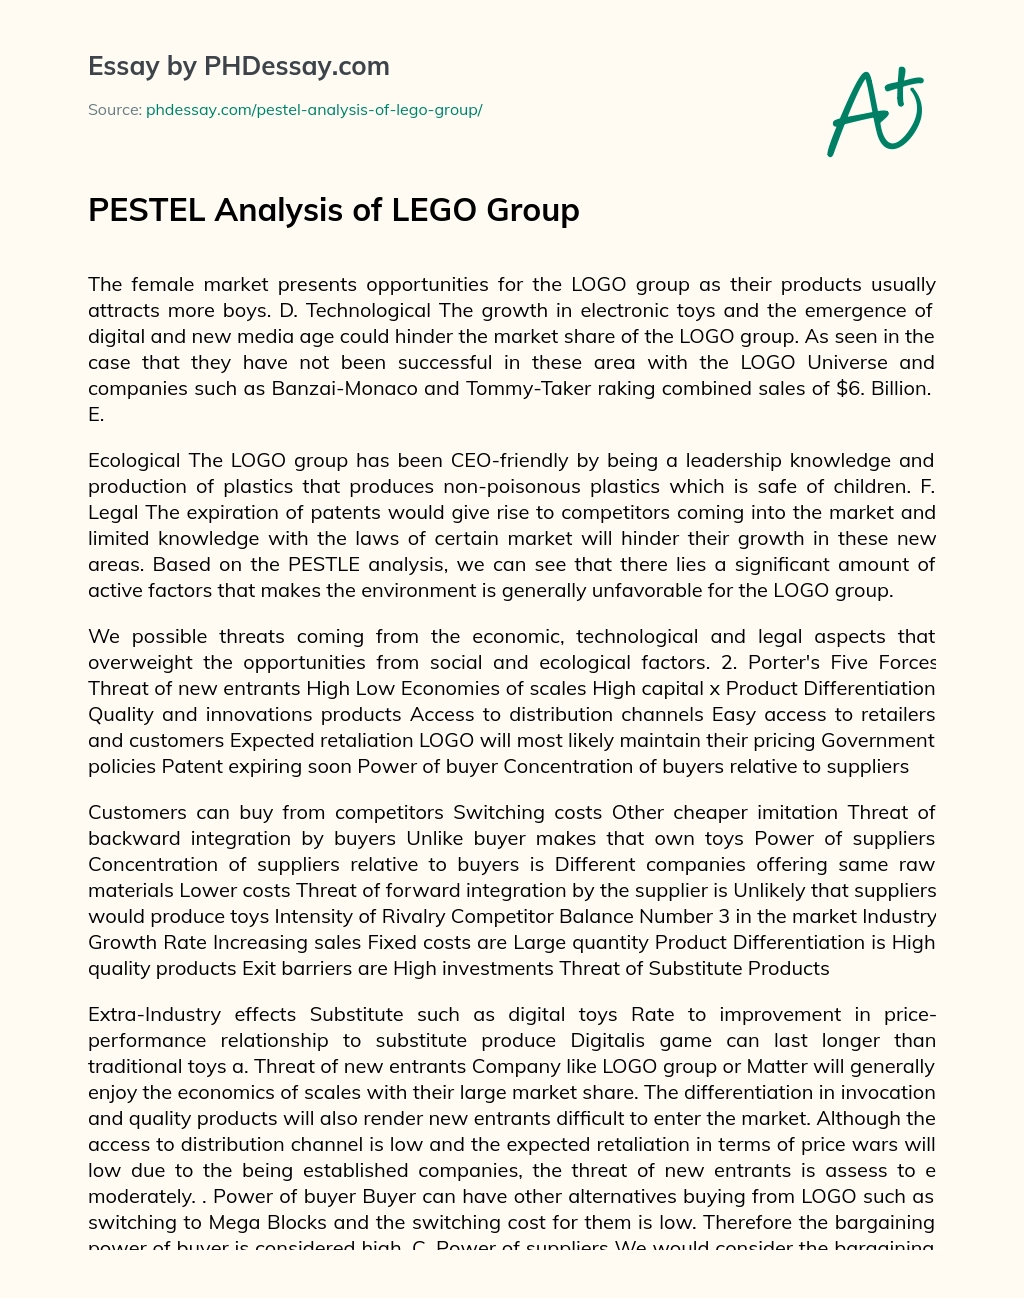 PESTEL Analysis of LEGO Group essay